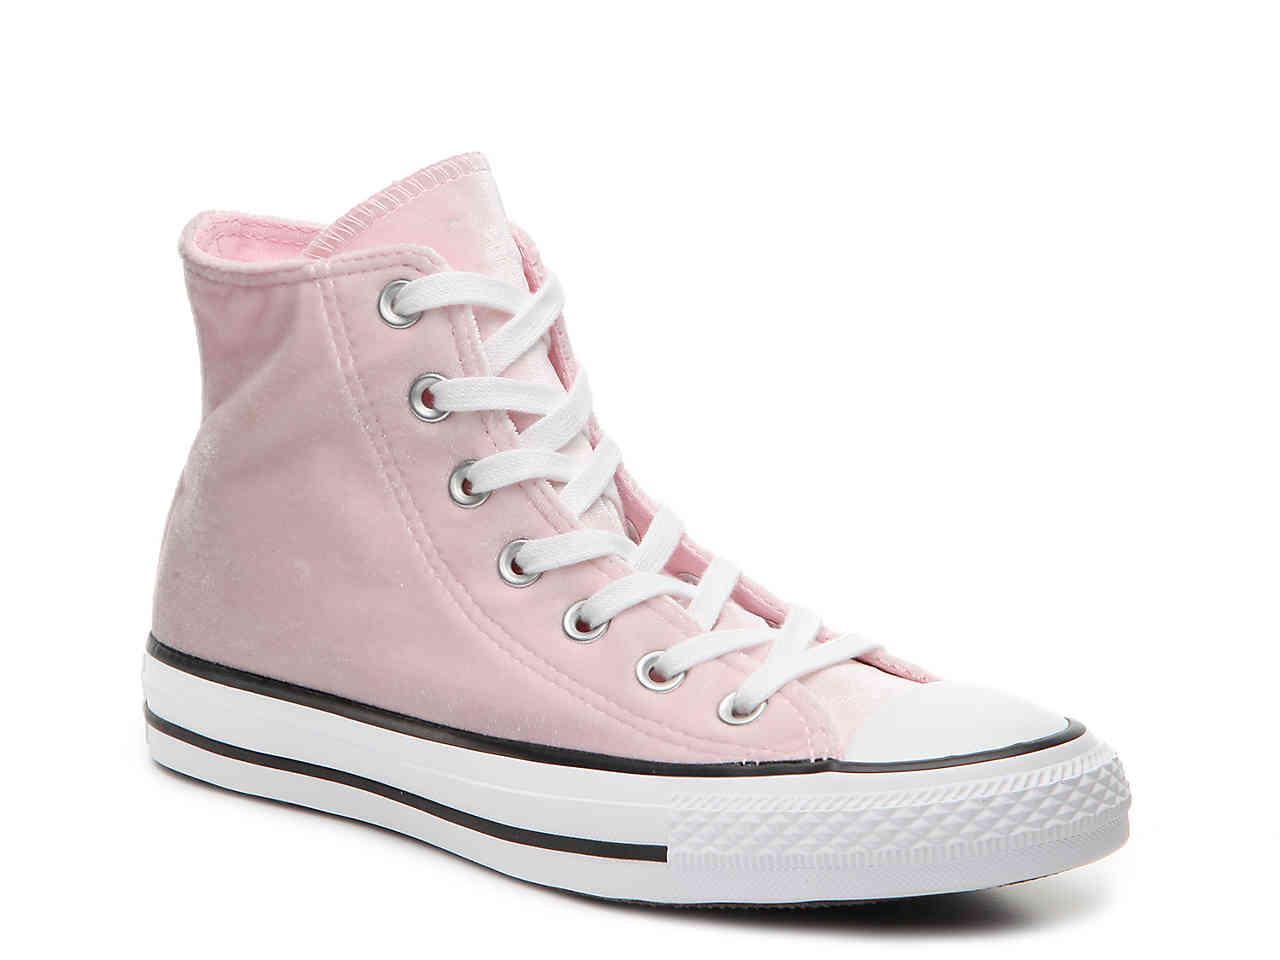 blush pink high top converse